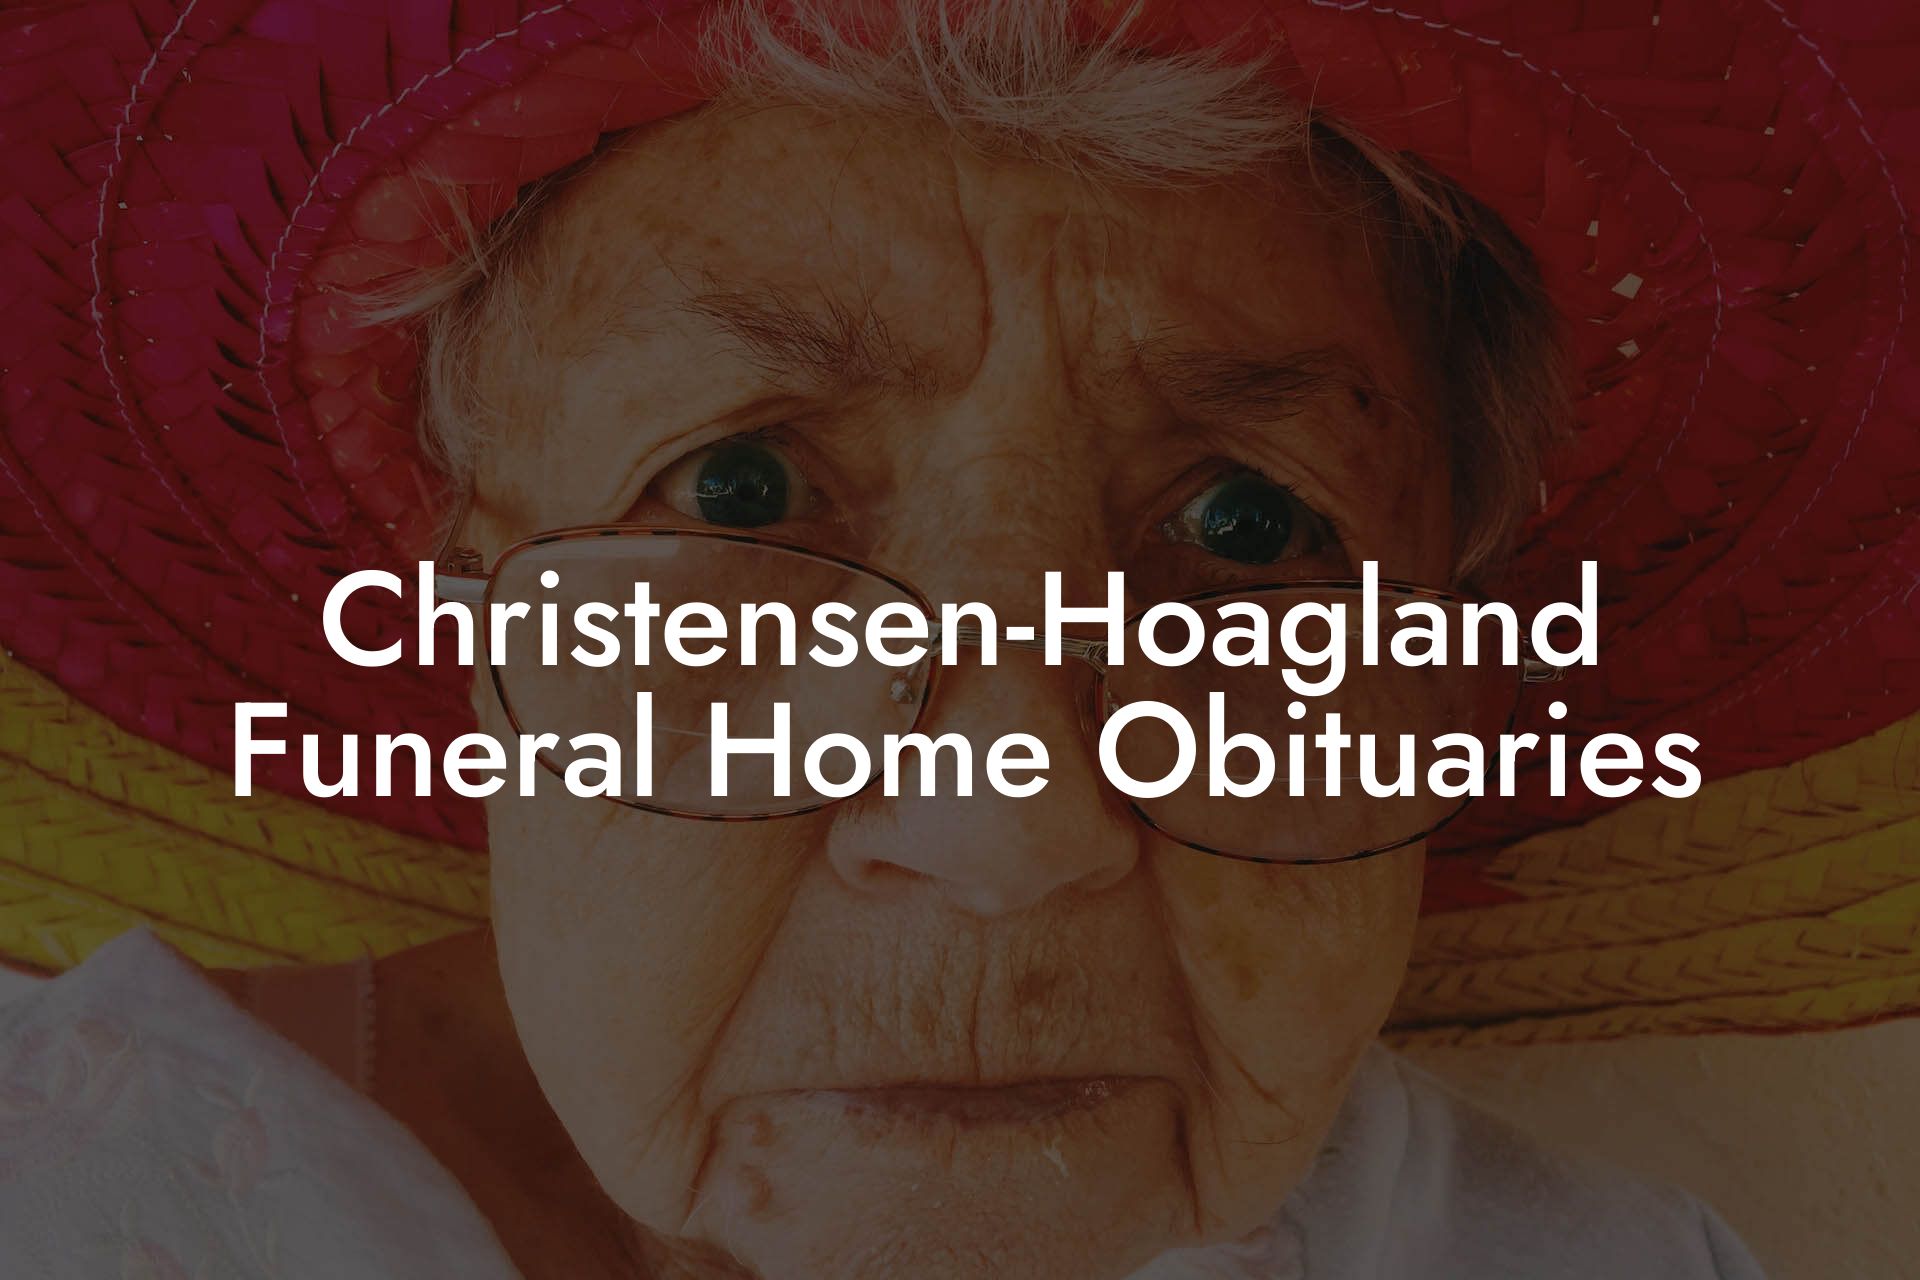 Christensen-Hoagland Funeral Home Obituaries